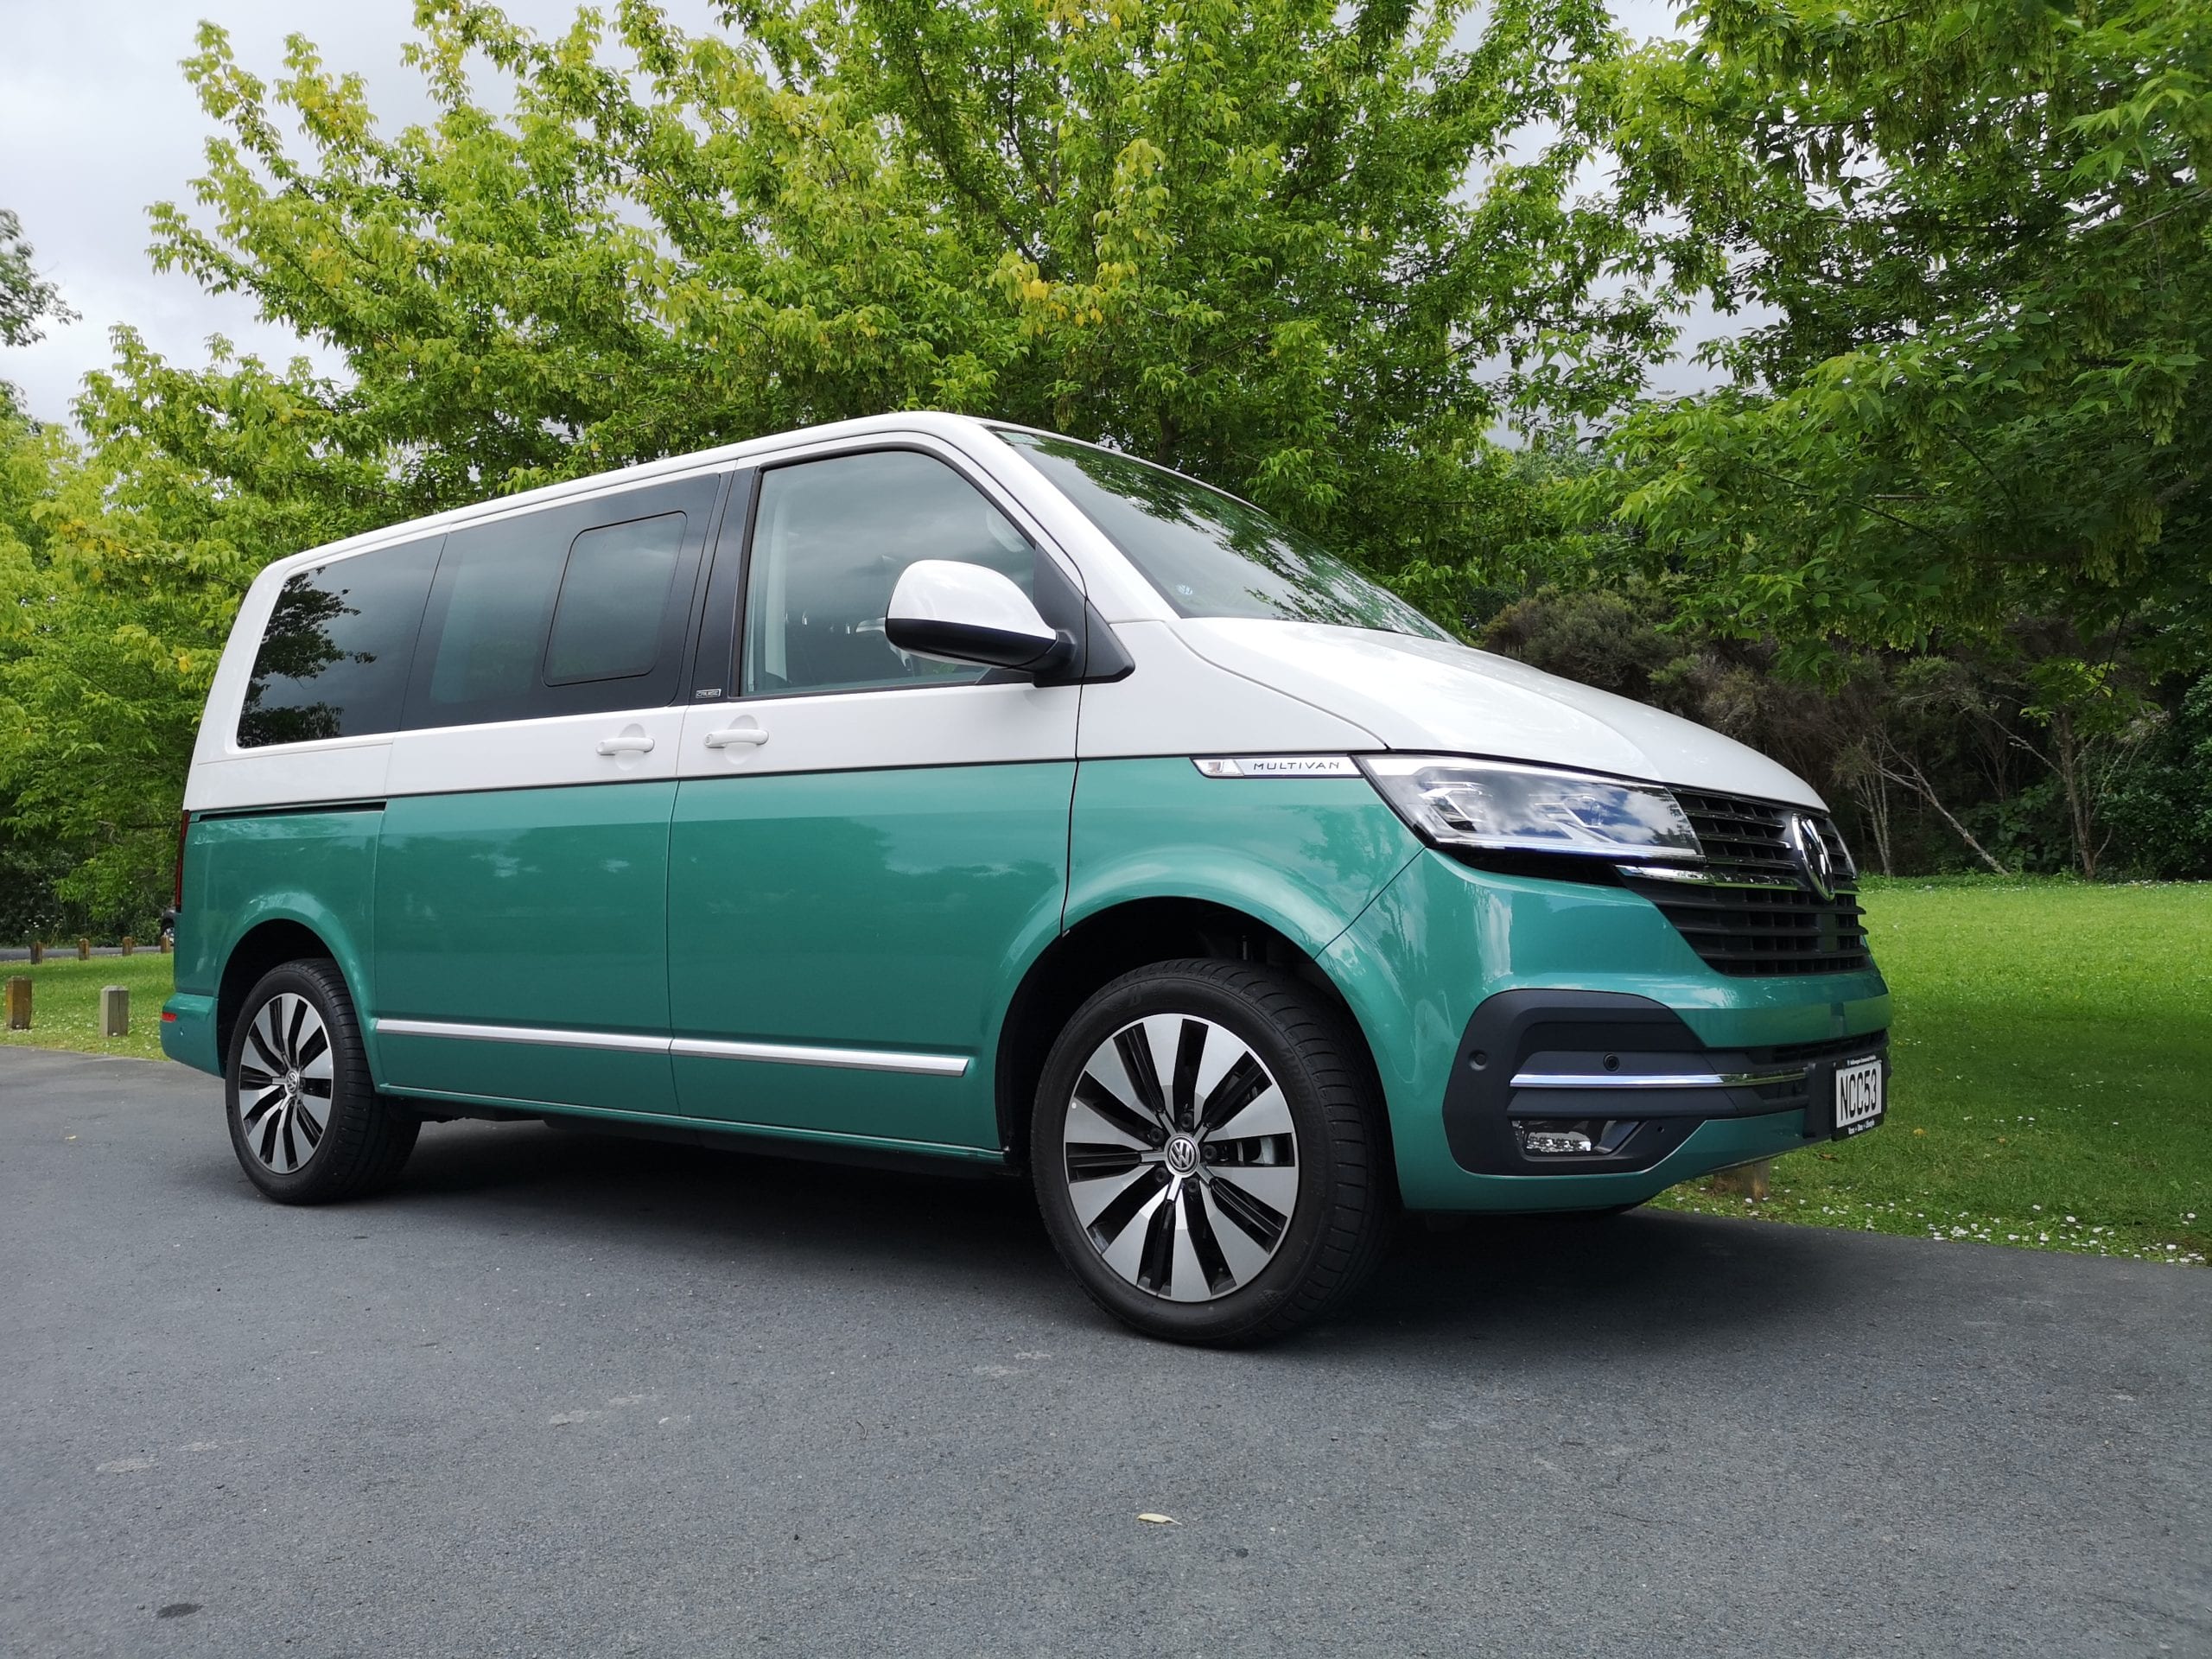 VW Multivan 6.1 Cruise review